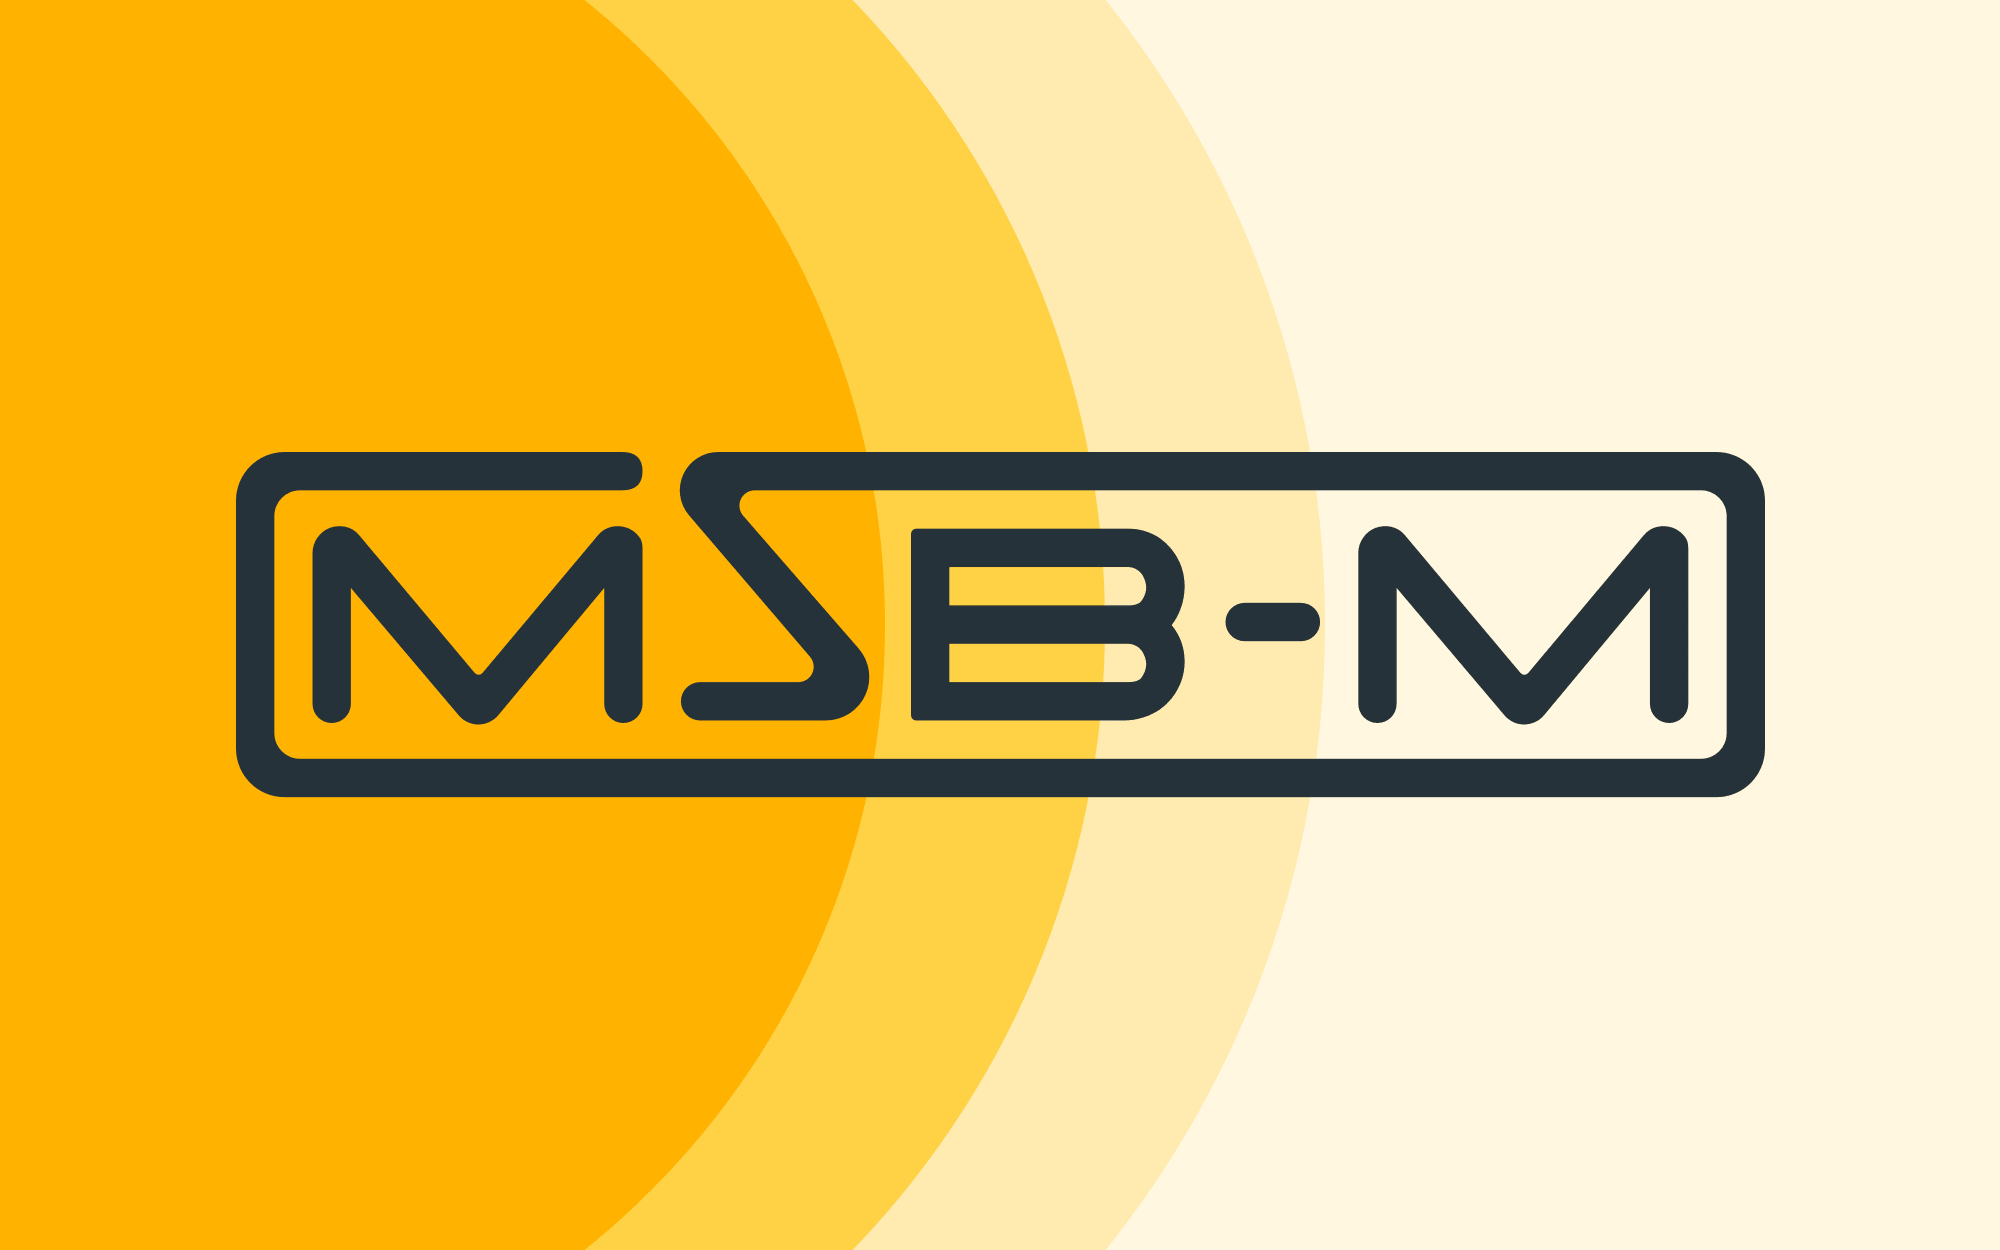 MSB-M by Proxima agency - Creative Work